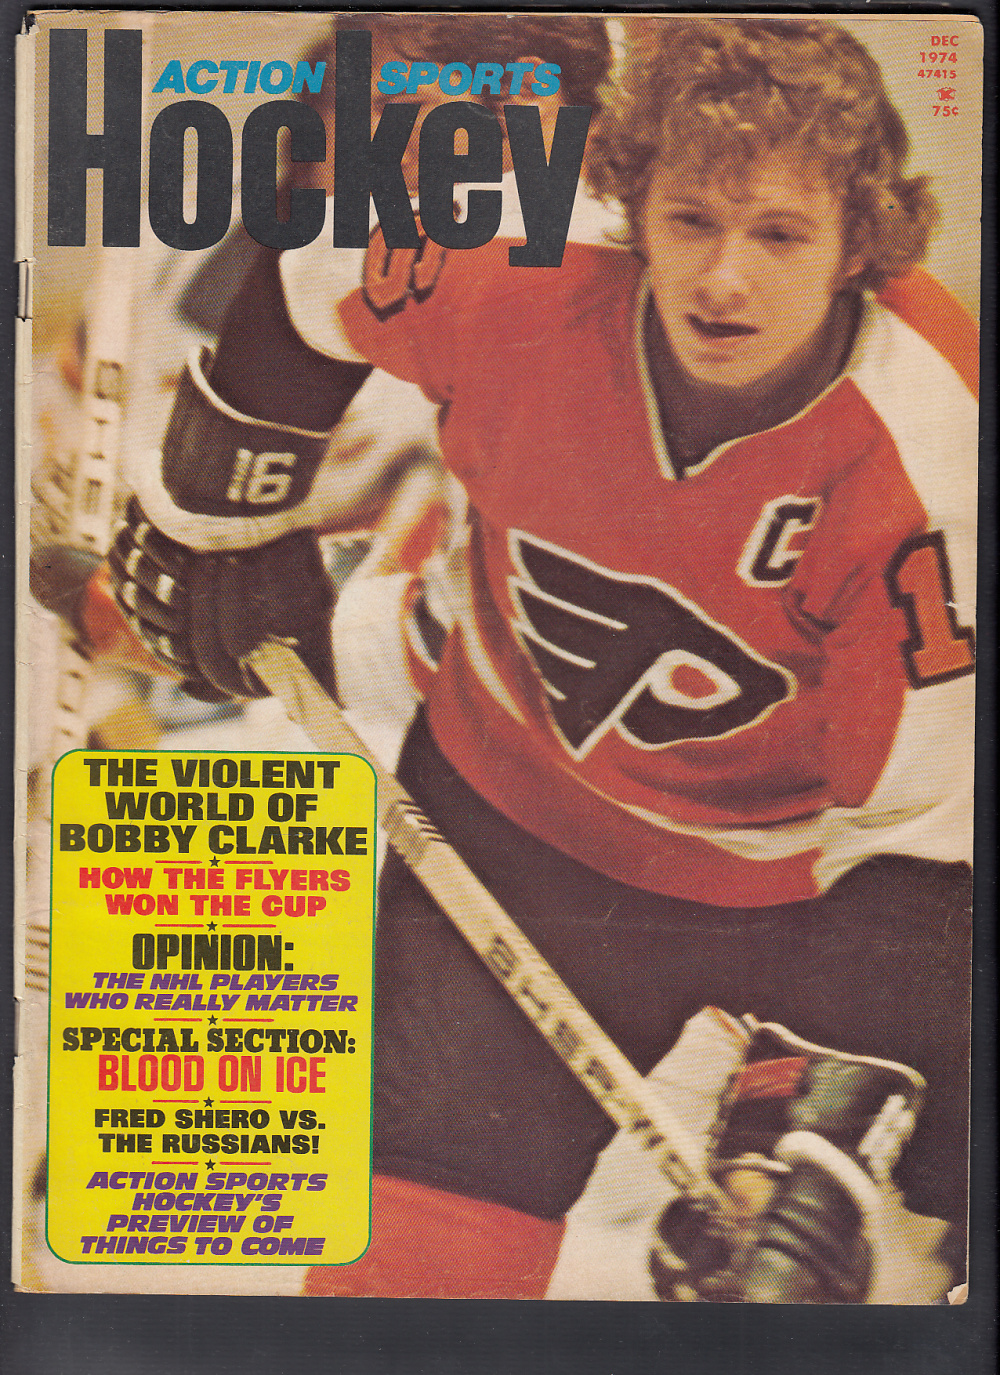 1974 HOCKEY ACTION SPORTS MAGAZINE B. CLARKE ON COVER photo